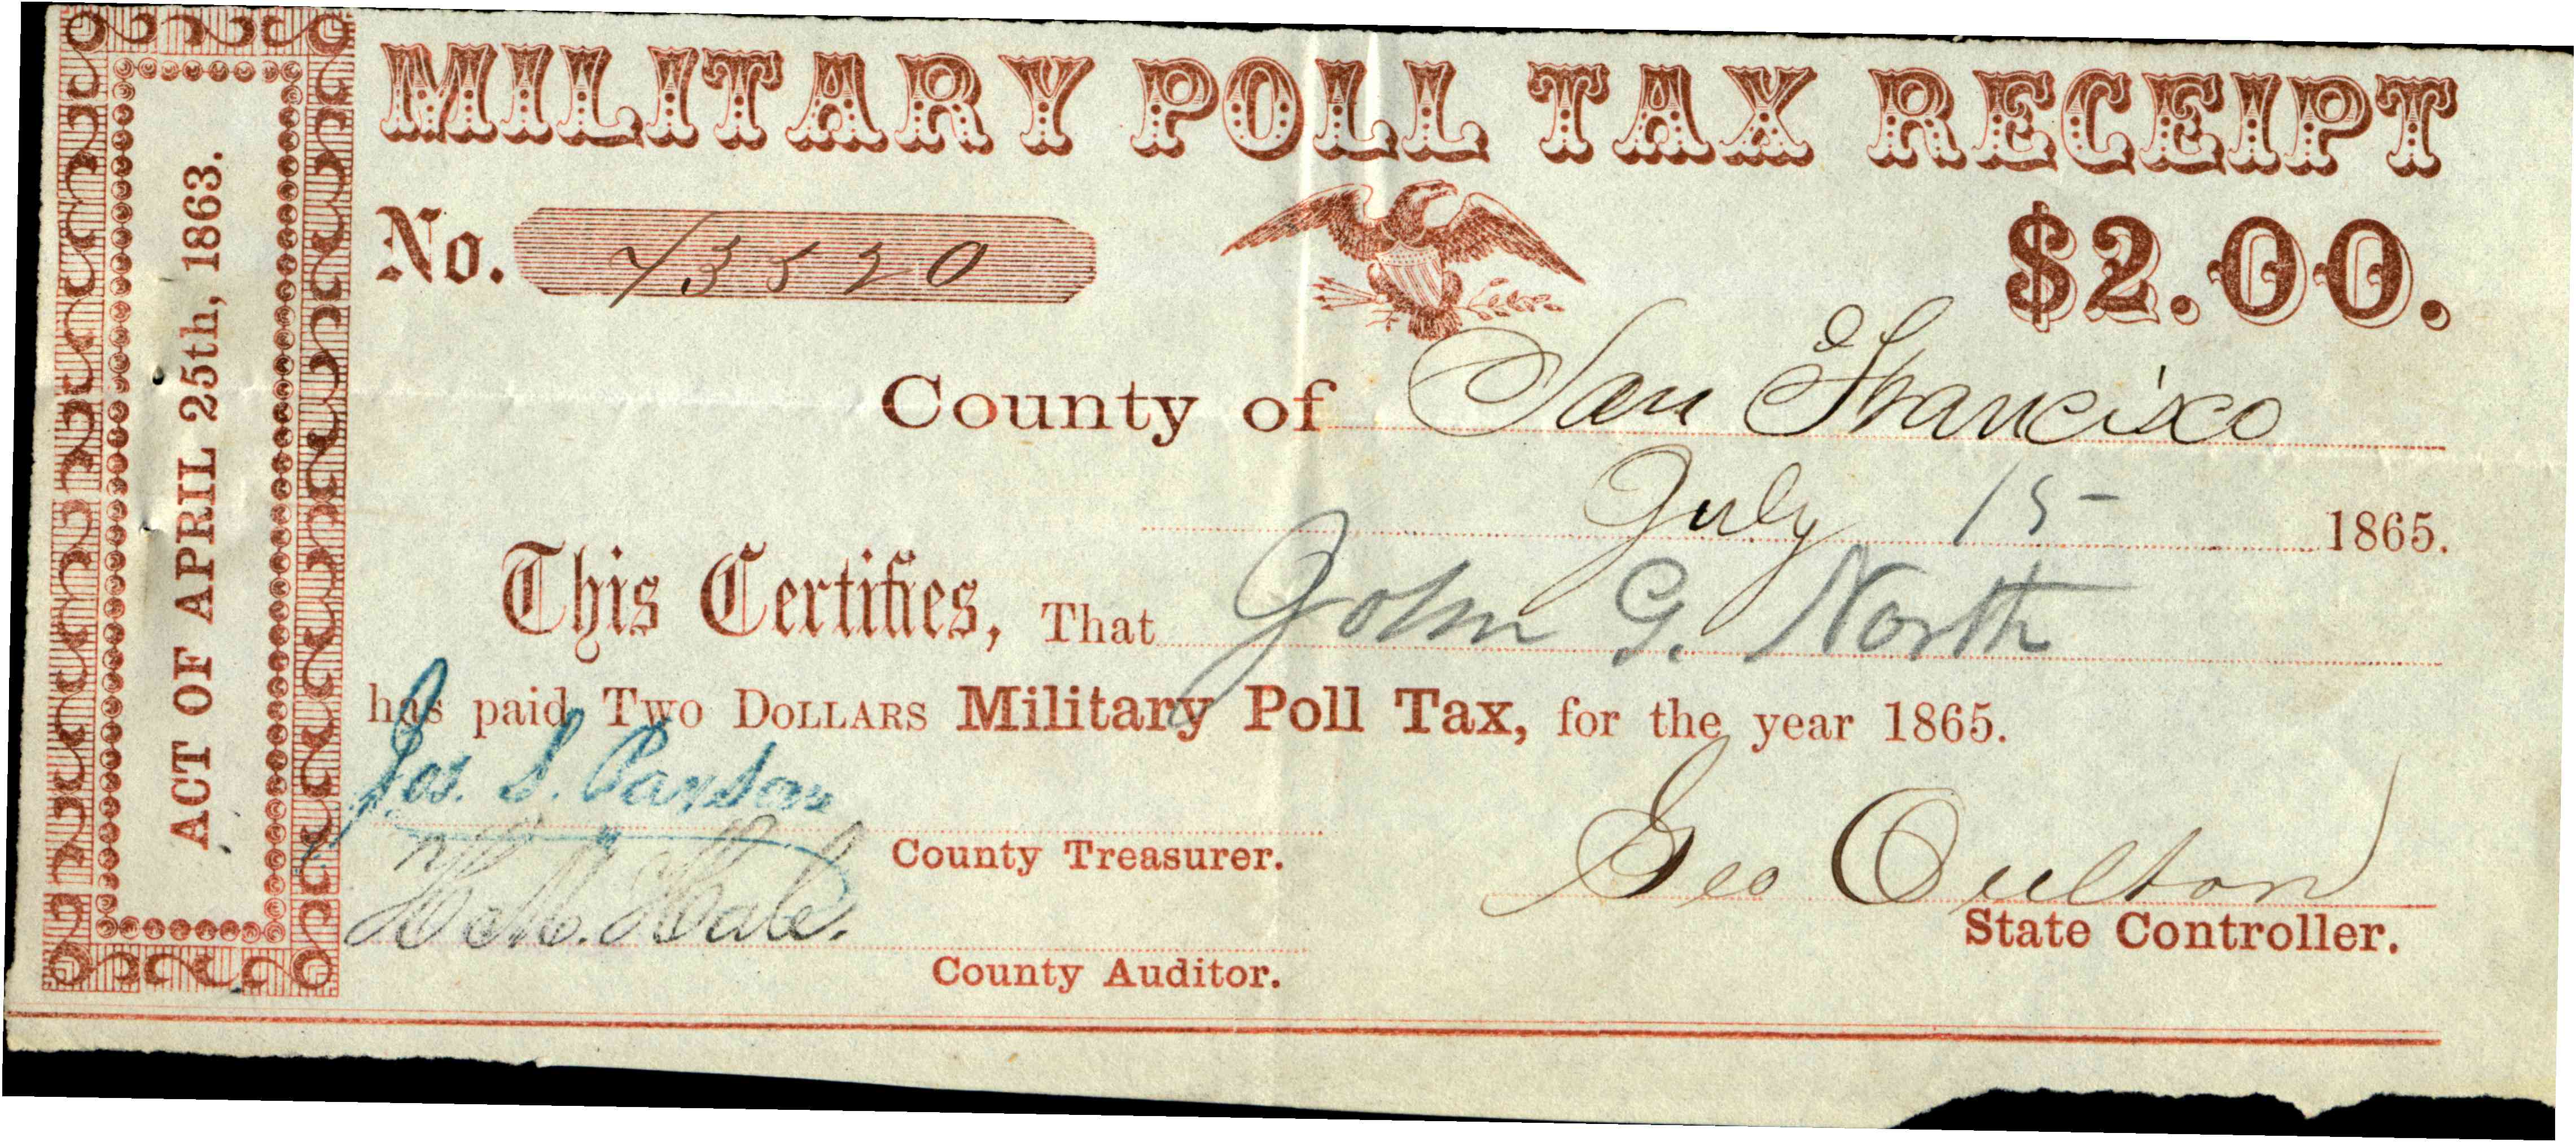 Military poll tax receipt